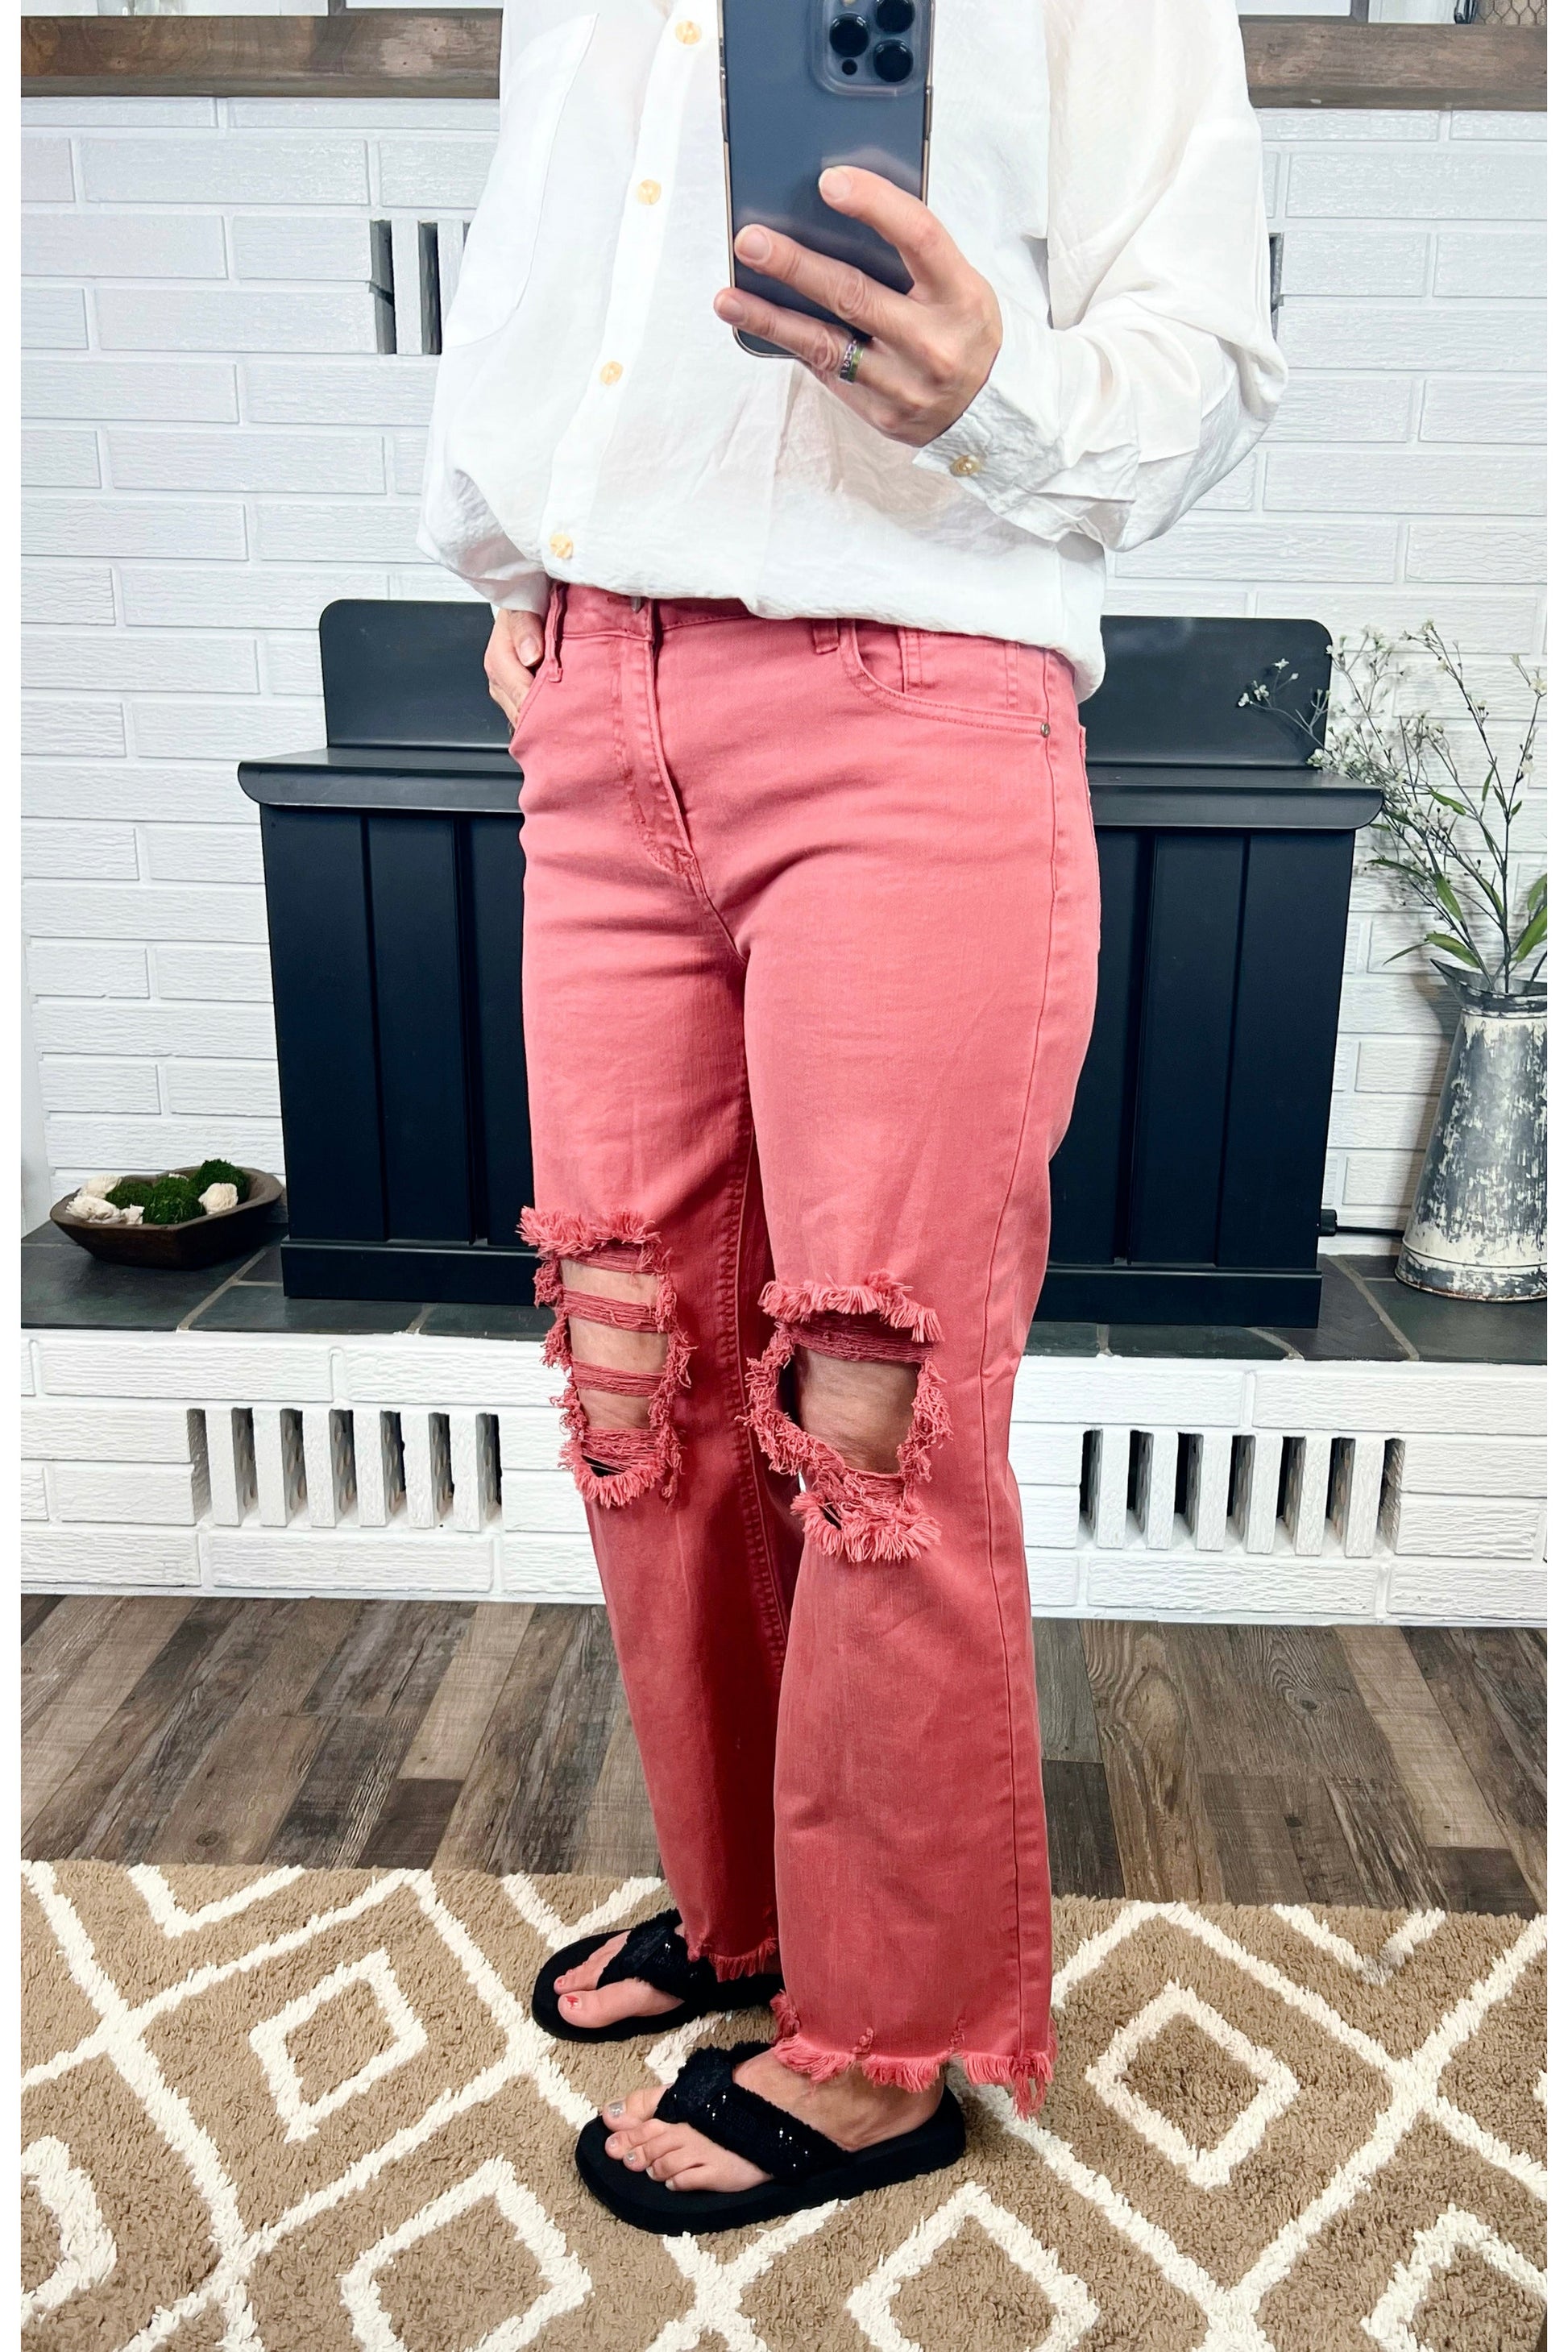 Risen Pink Straightleg Jeans